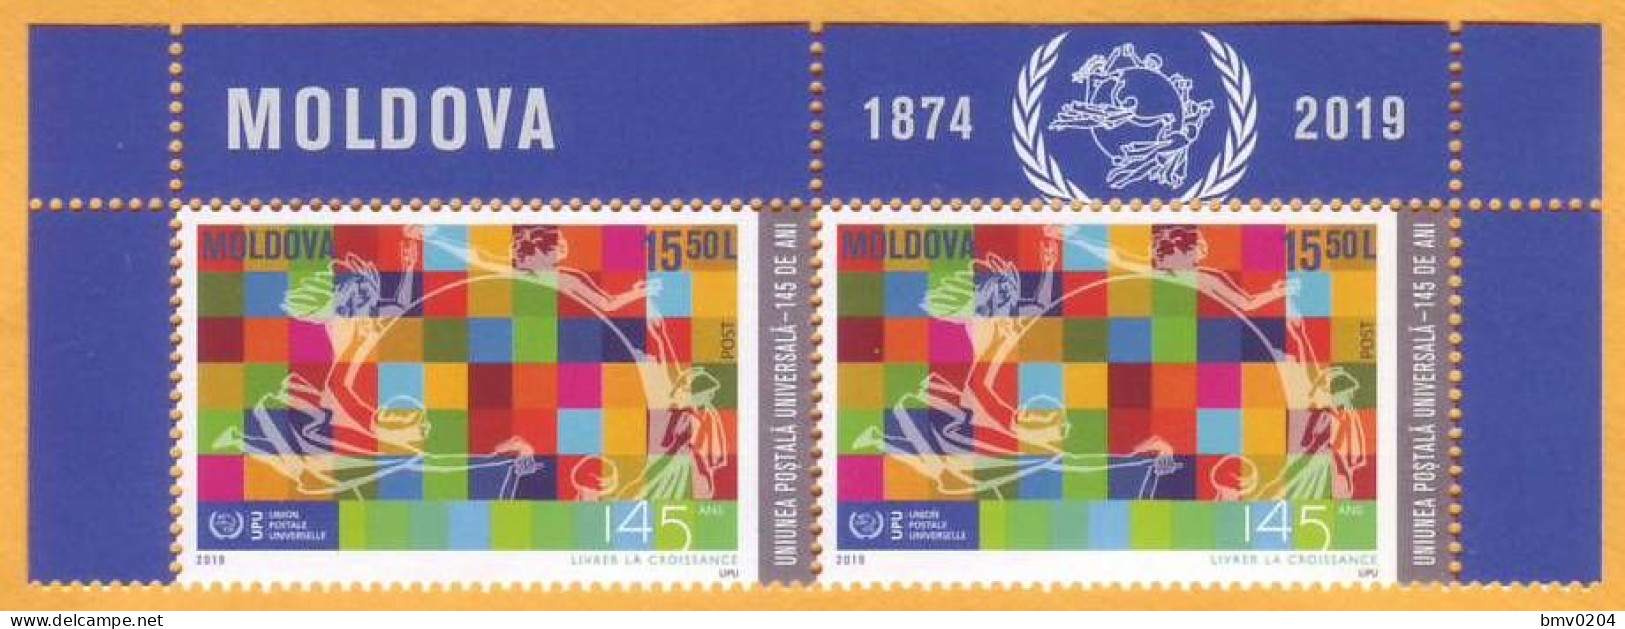 2019 Moldova Moldavie  145 Universal Postal Union. Switzerland. Berne. Monument  2v  Mint. - Moldova